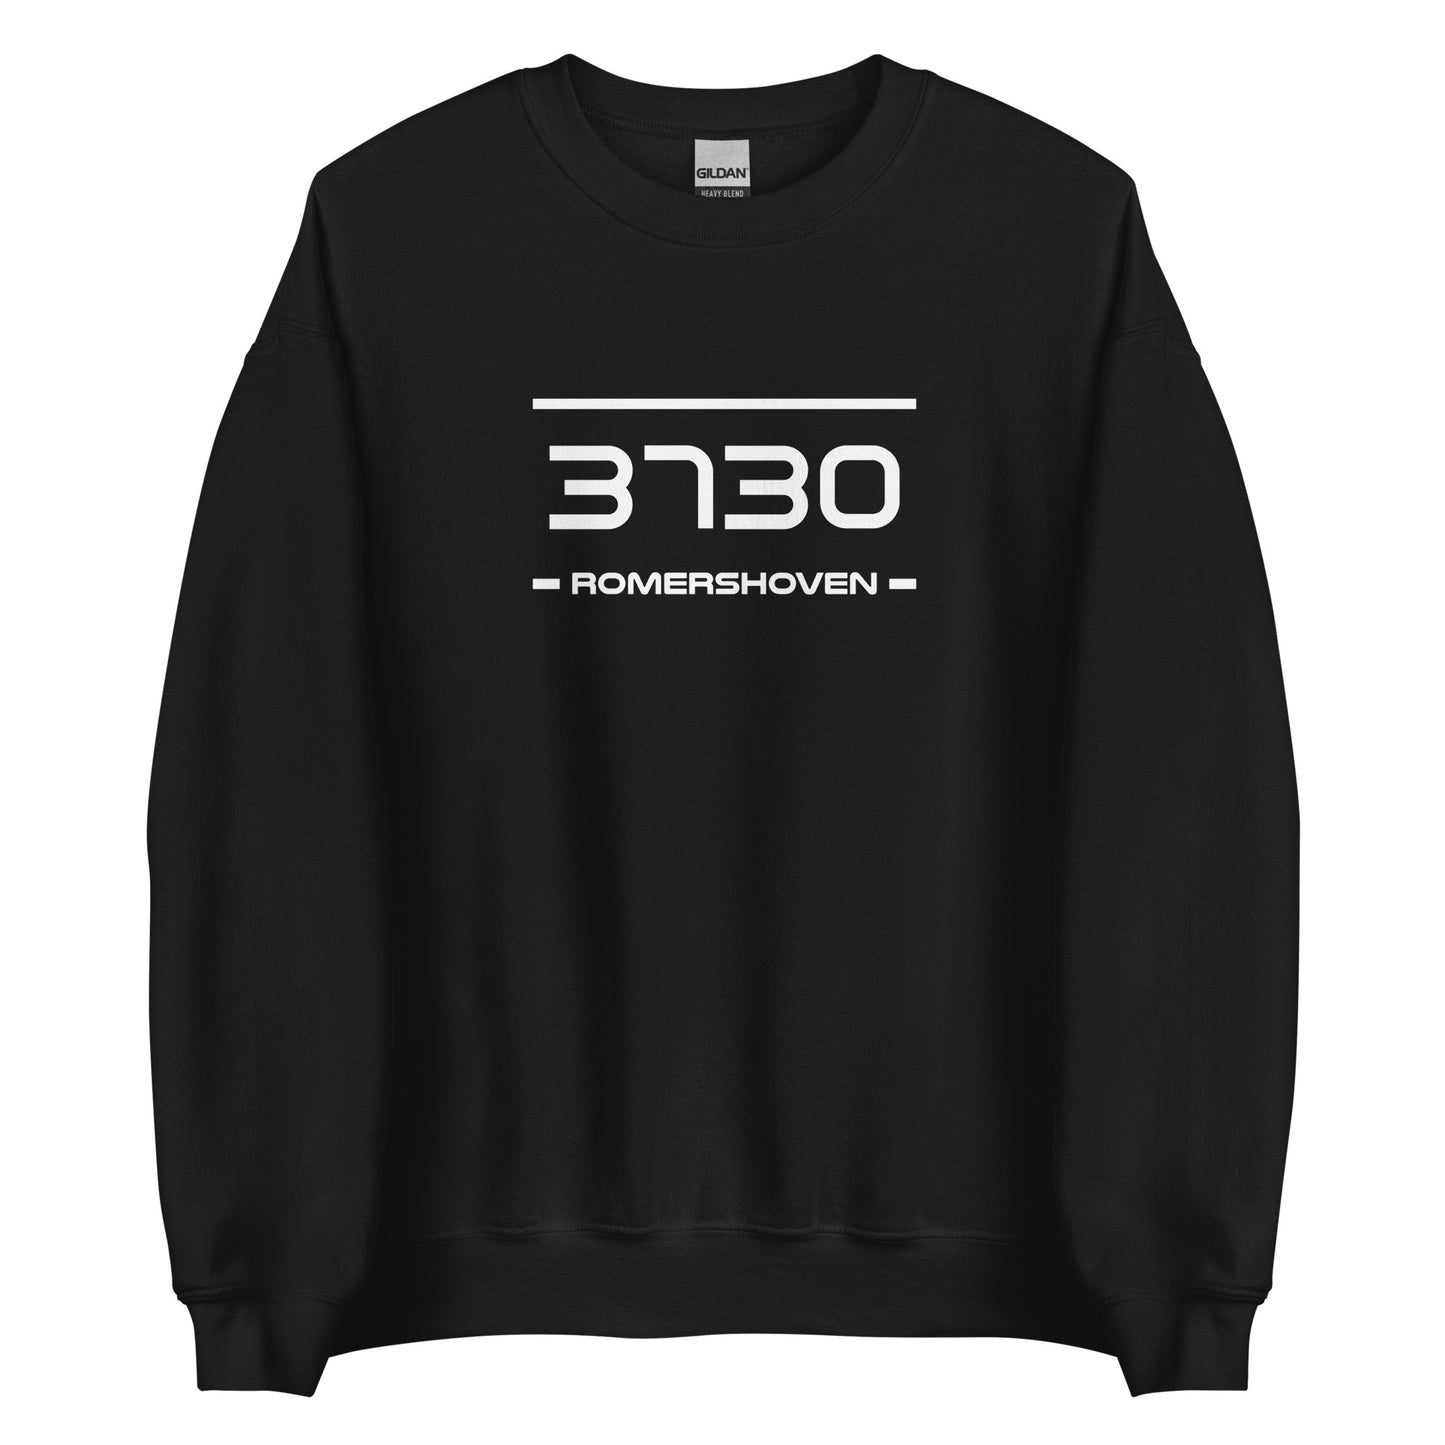 Sweater - 3730 - Romershoven (M/V)